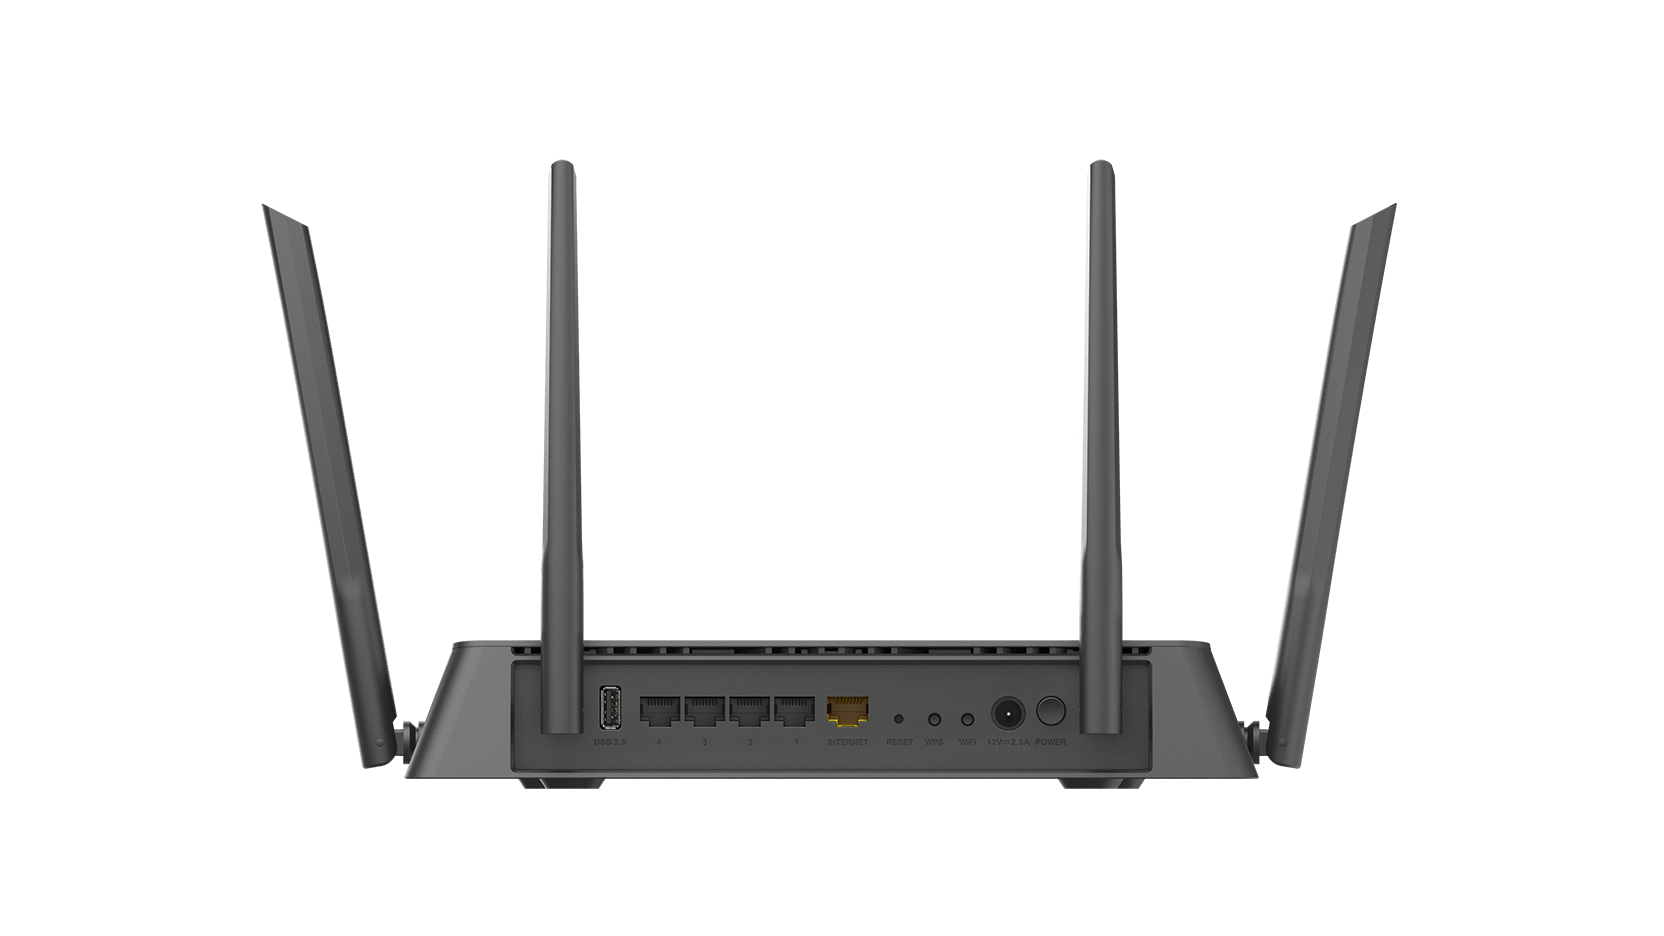 DIR-882 EXO AC2600 MU-MIMO Wi-Fi Router